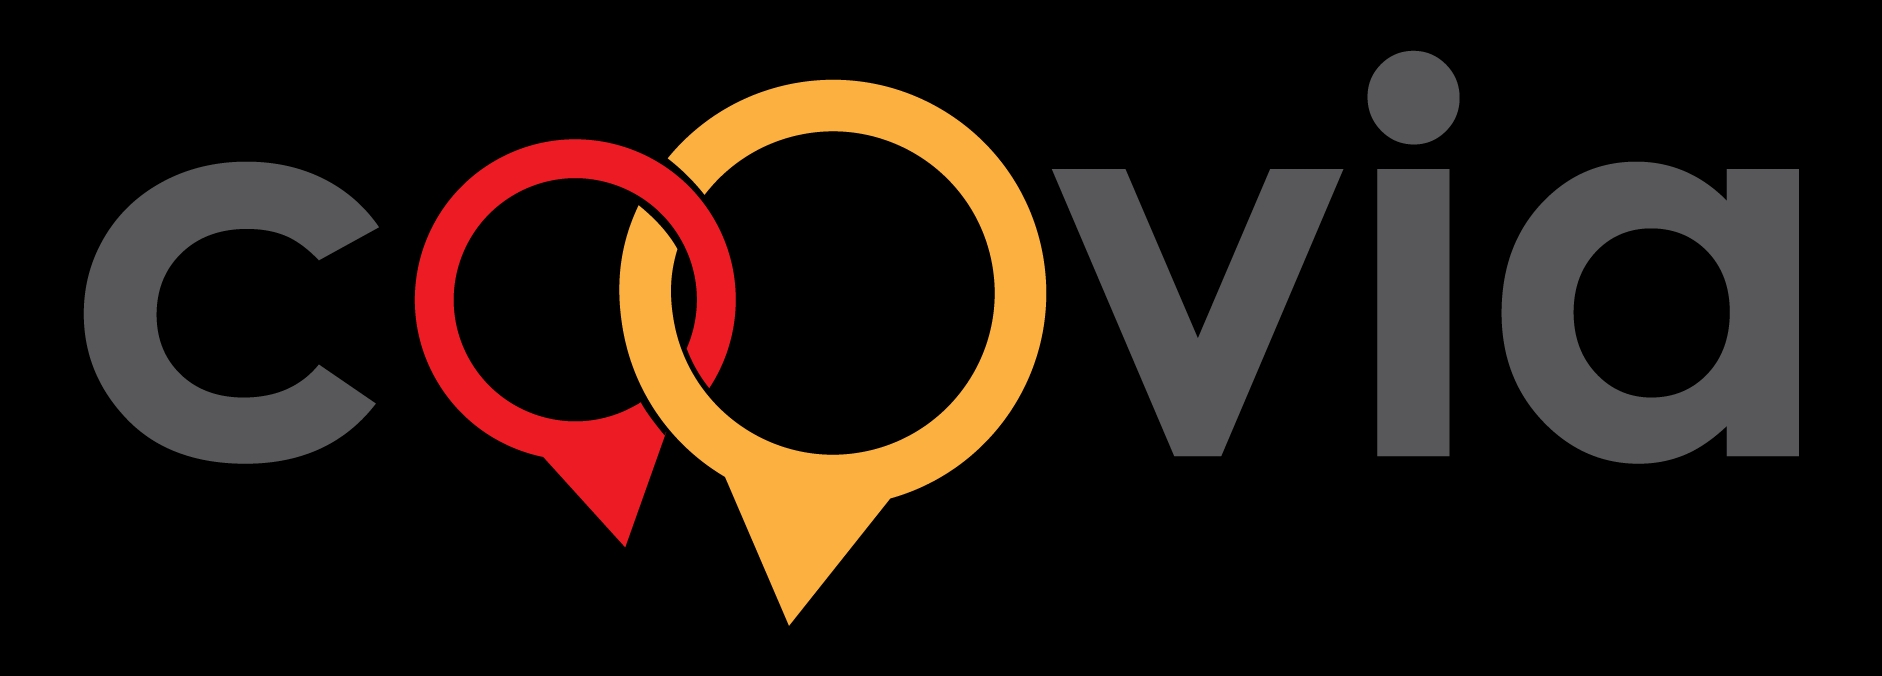 Logo_Coovia